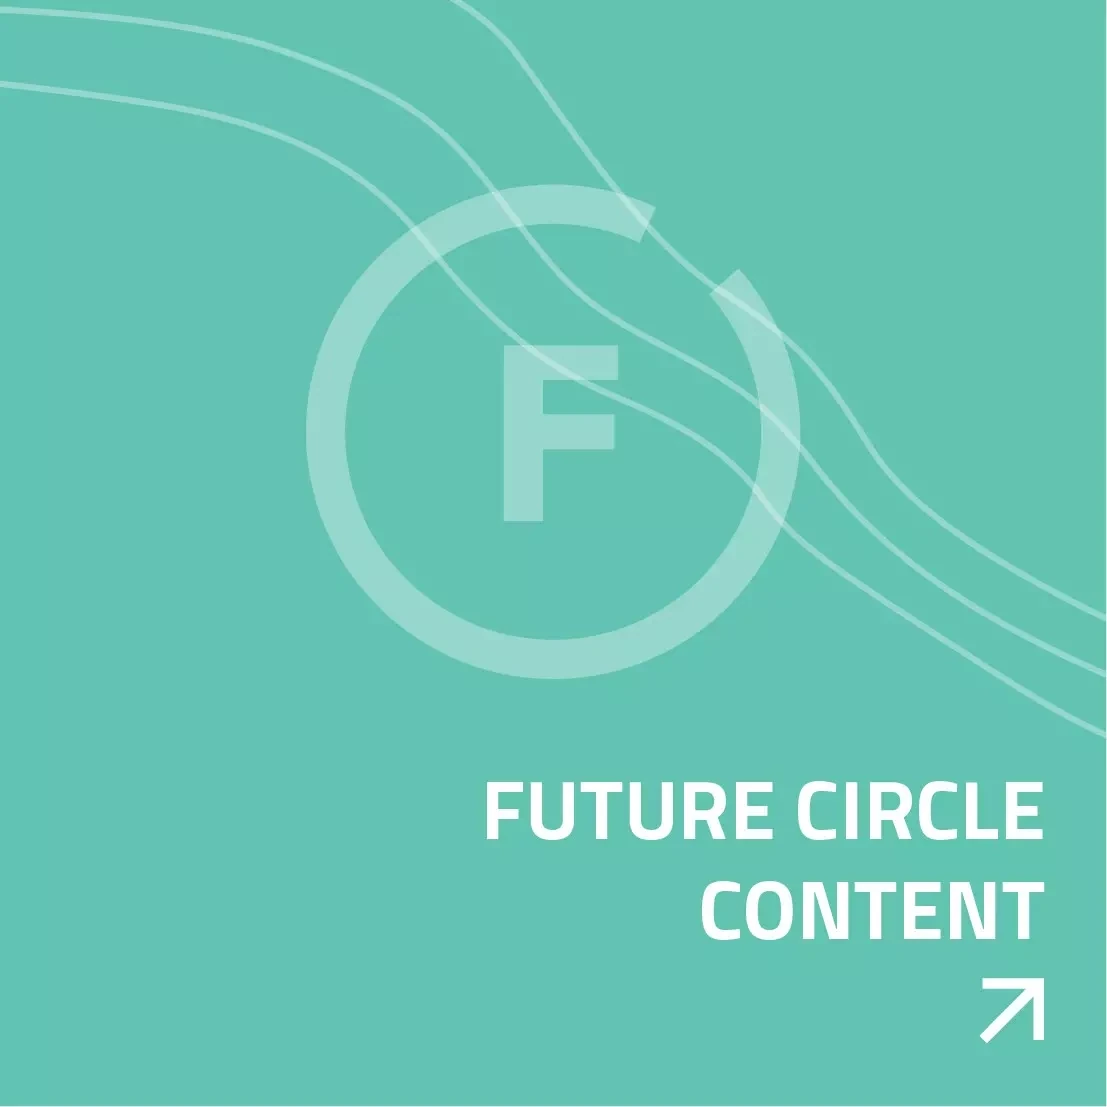 Future-Circle-Mitgliedschaft Content